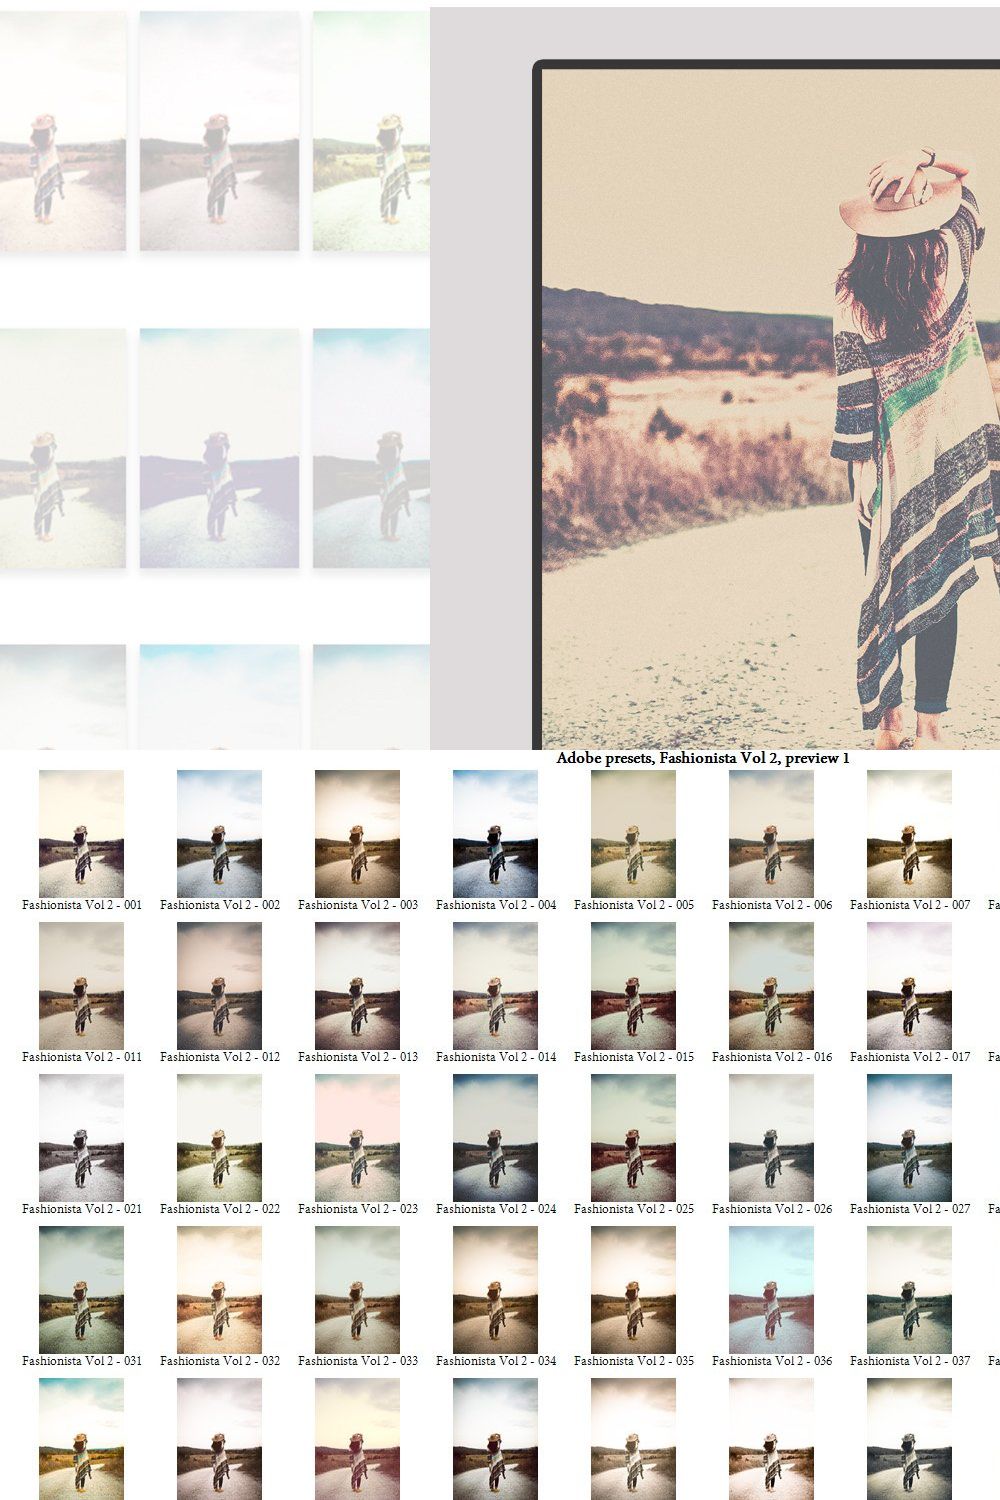 Fashionista Vol 2 Adobe presets pinterest preview image.